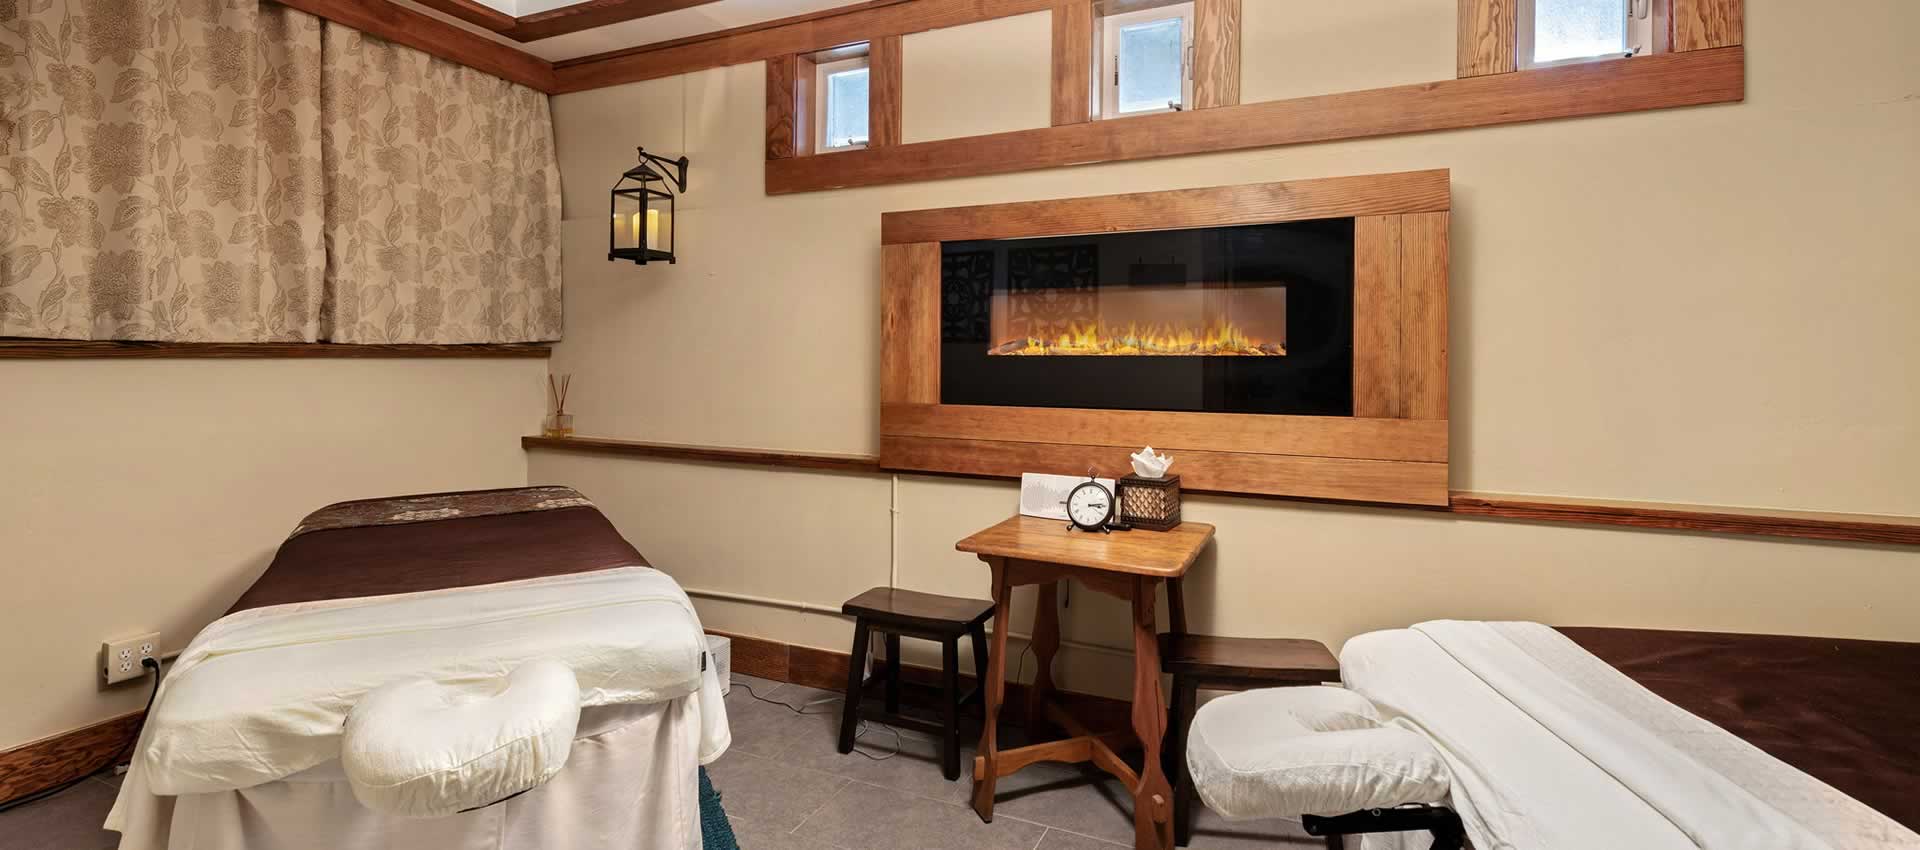 Grand Idyllwild Lodge massage tables and fireplace